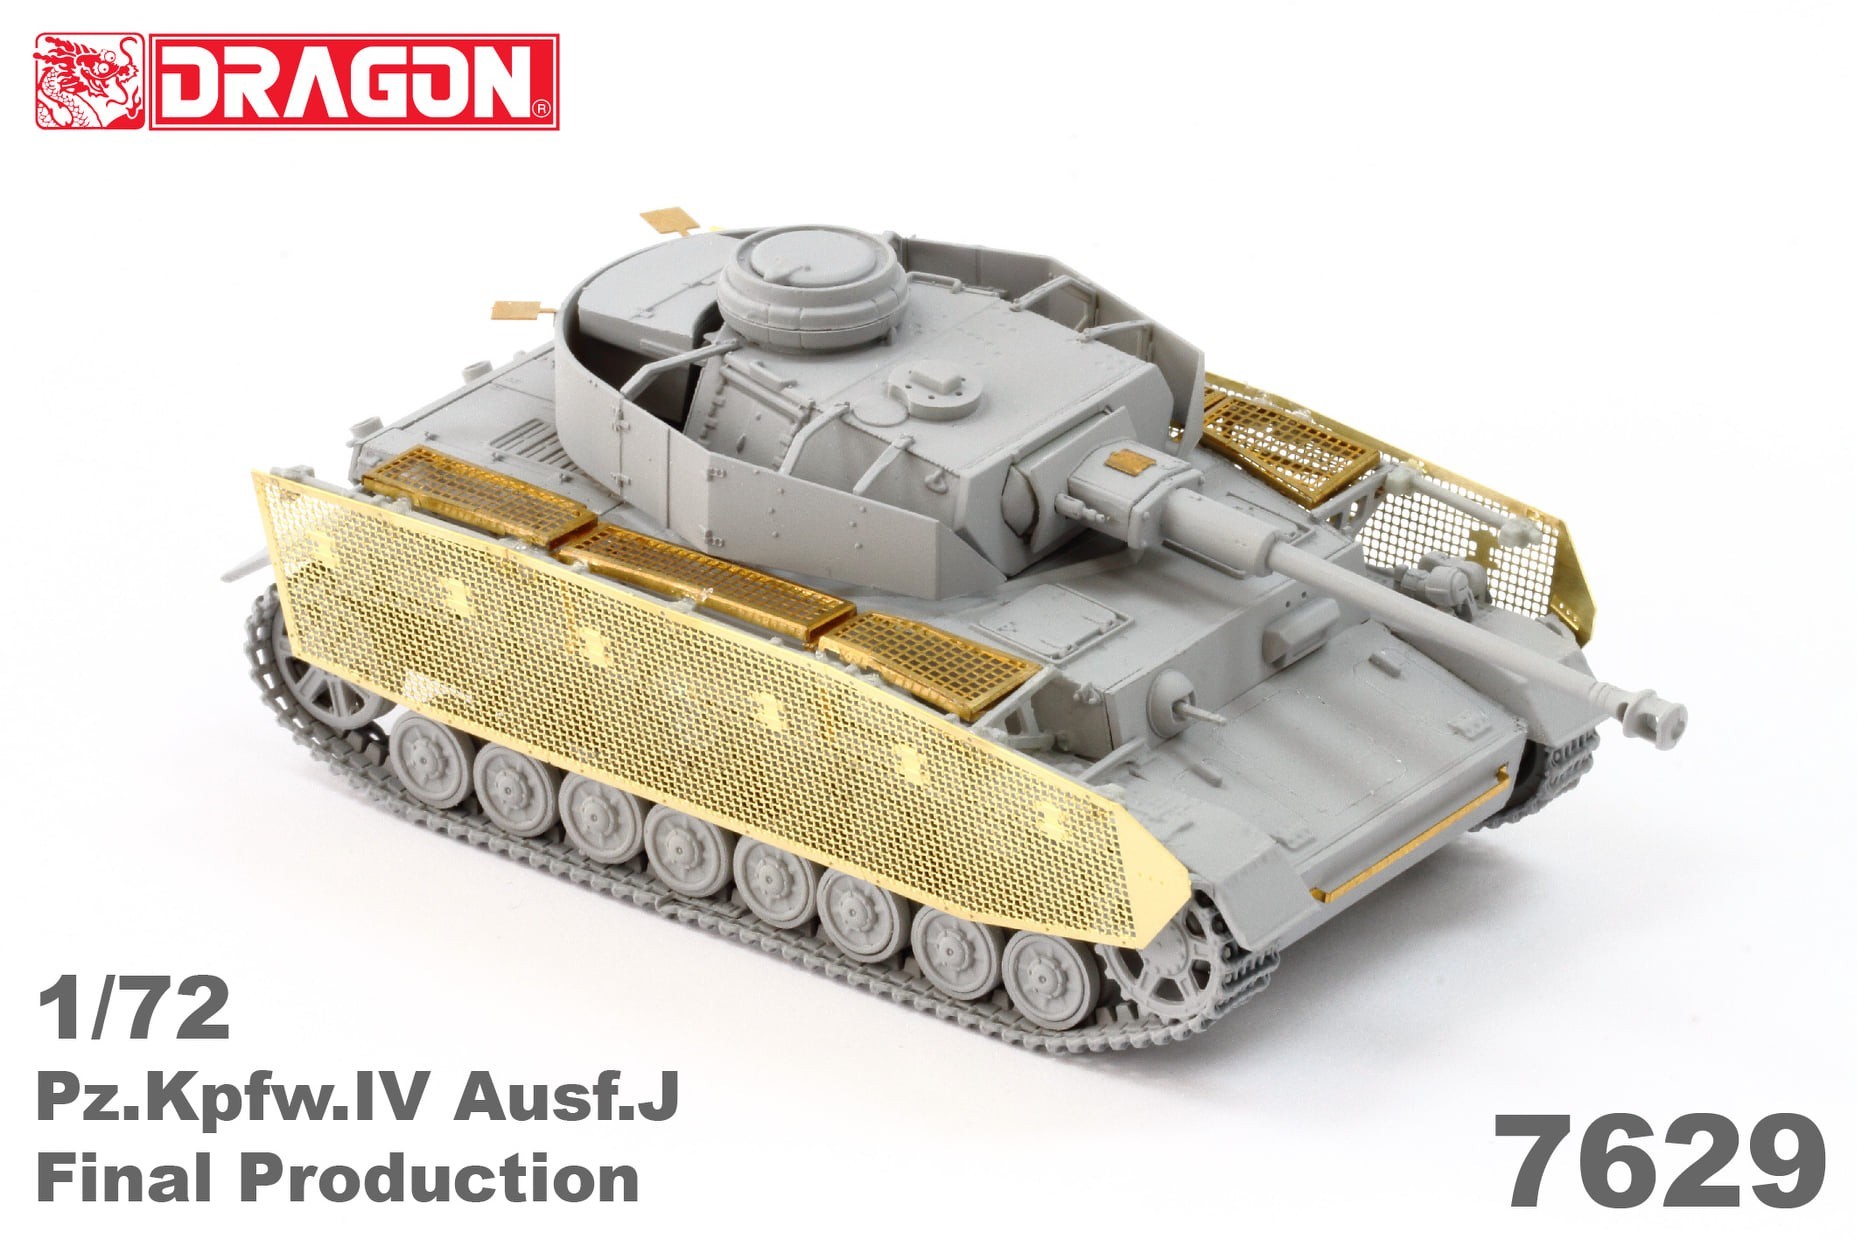 1/72 tank model finished non diecast F DRAGON WWII GERMAN Pz.Kpfw.IV Ausf.F1 